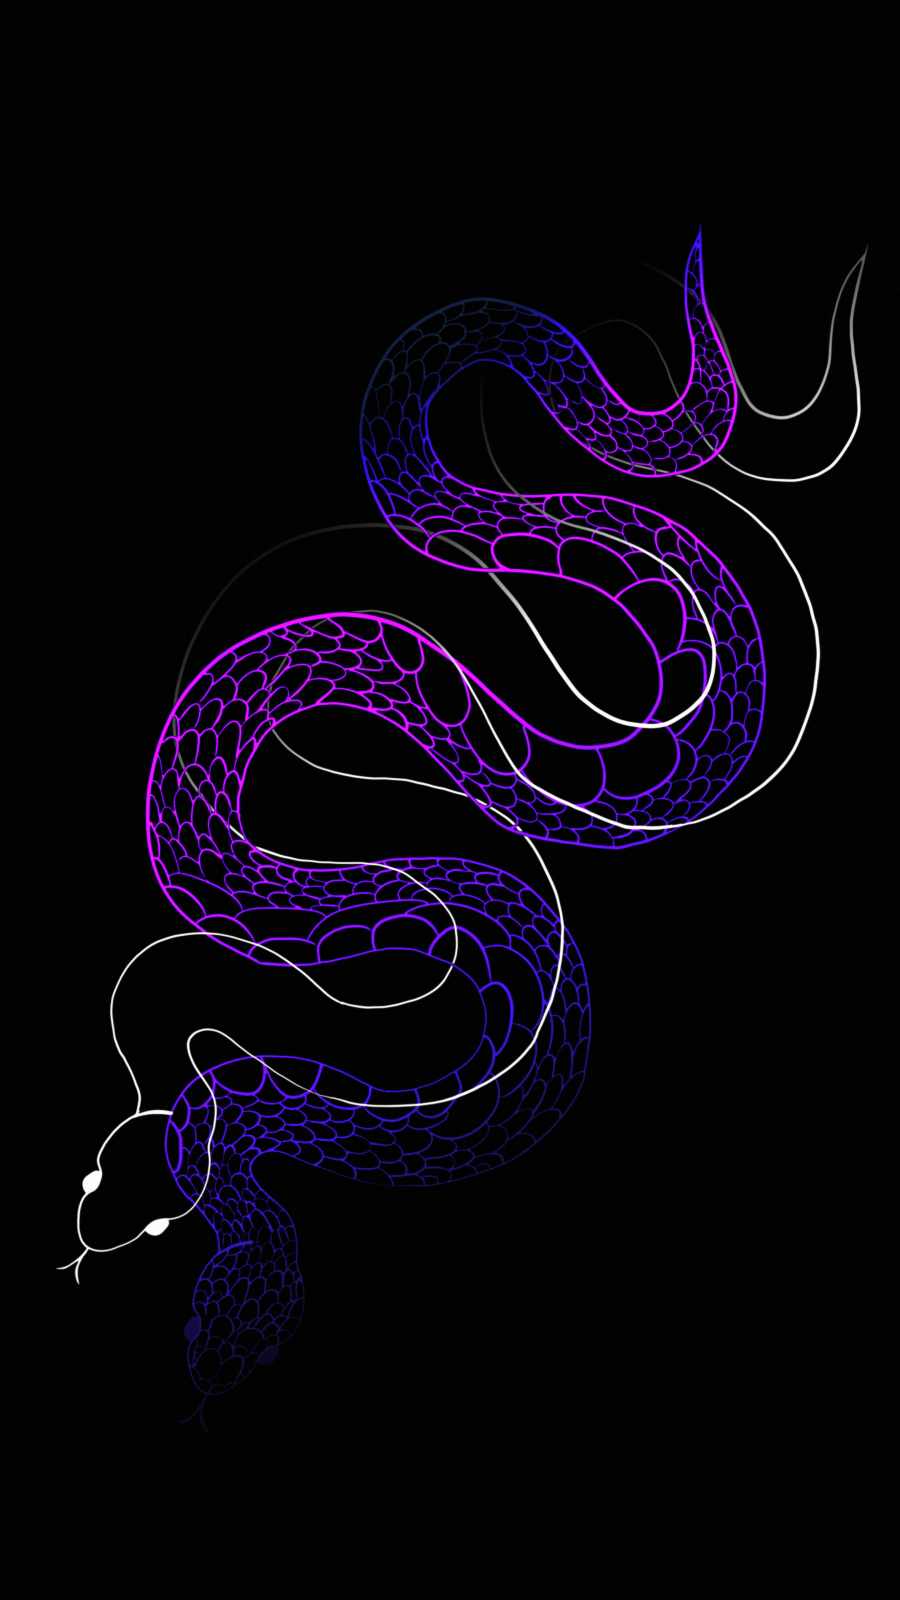 HD wallpaper Blue Snake teal snake wallpaper Animals reptile black  background  Wallpaper Flare